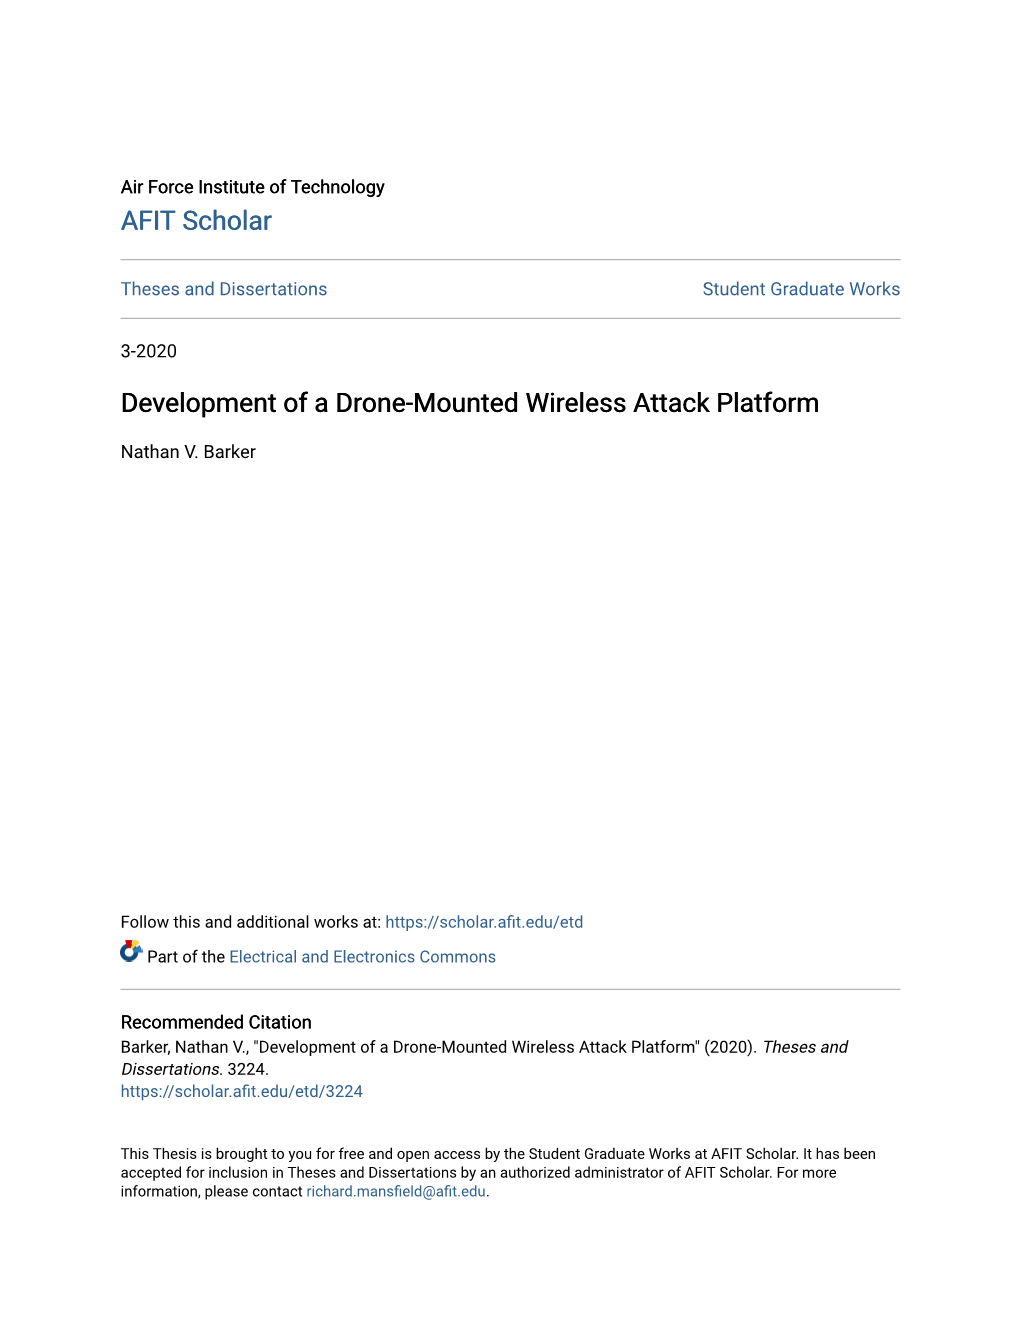 Development of a Drone-Mounted Wireless Attack Platform